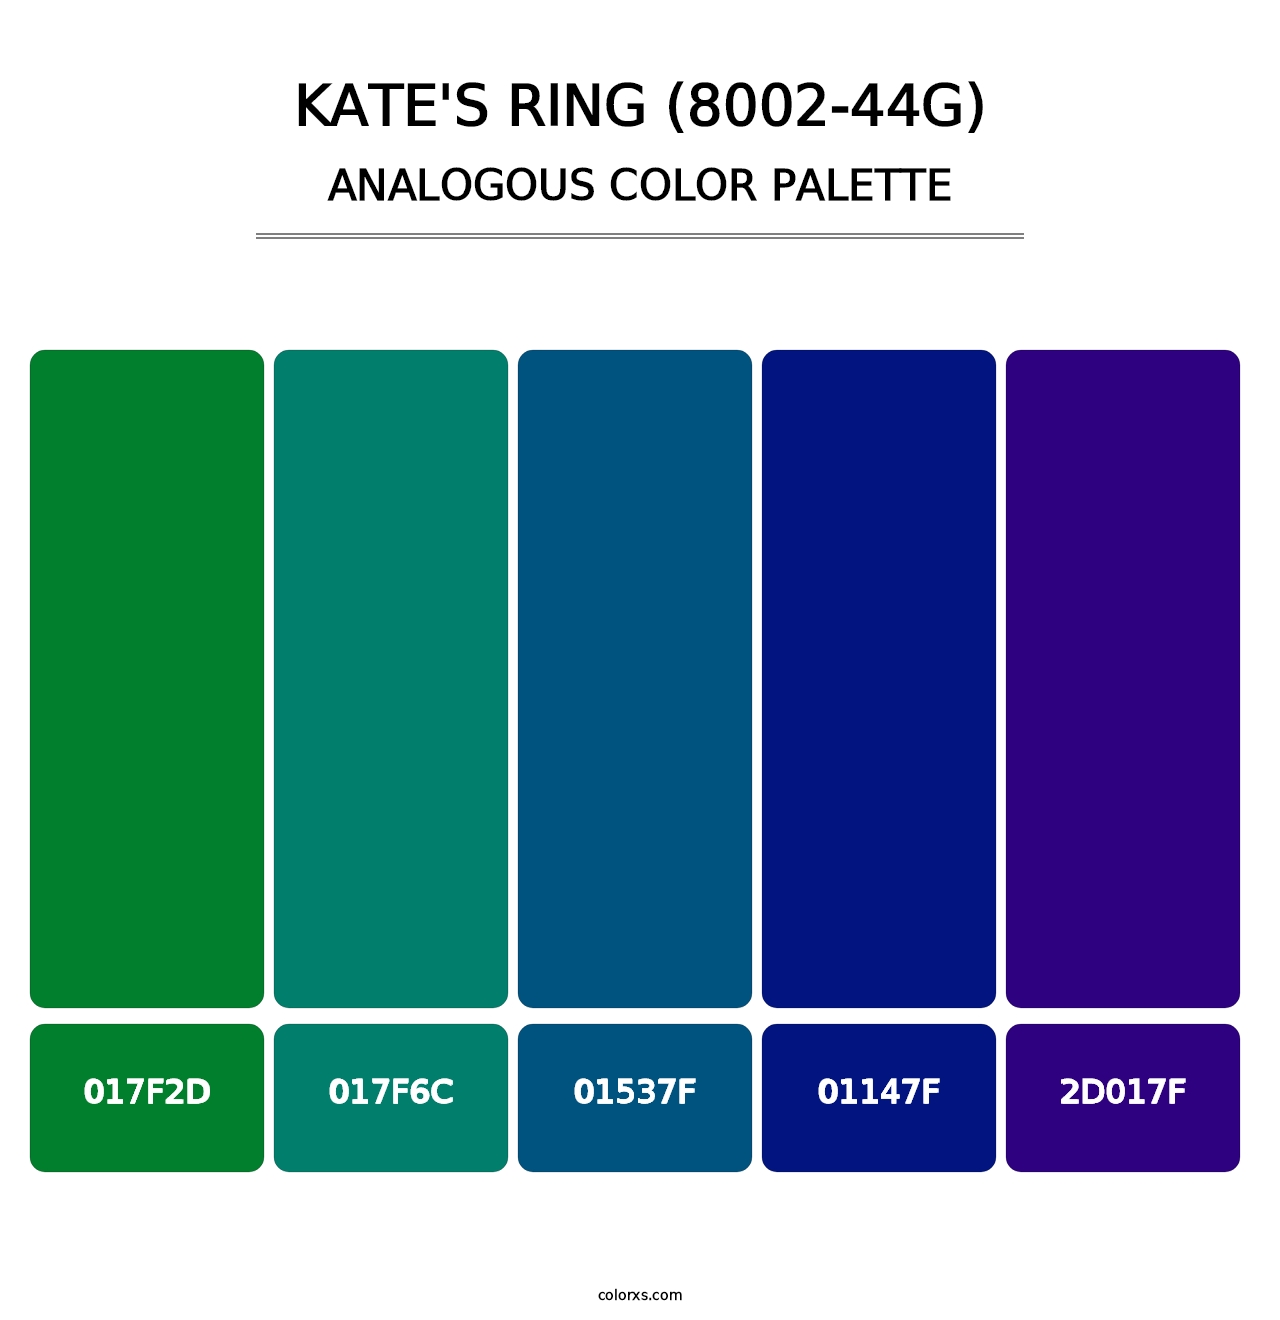 Kate's Ring (8002-44G) - Analogous Color Palette